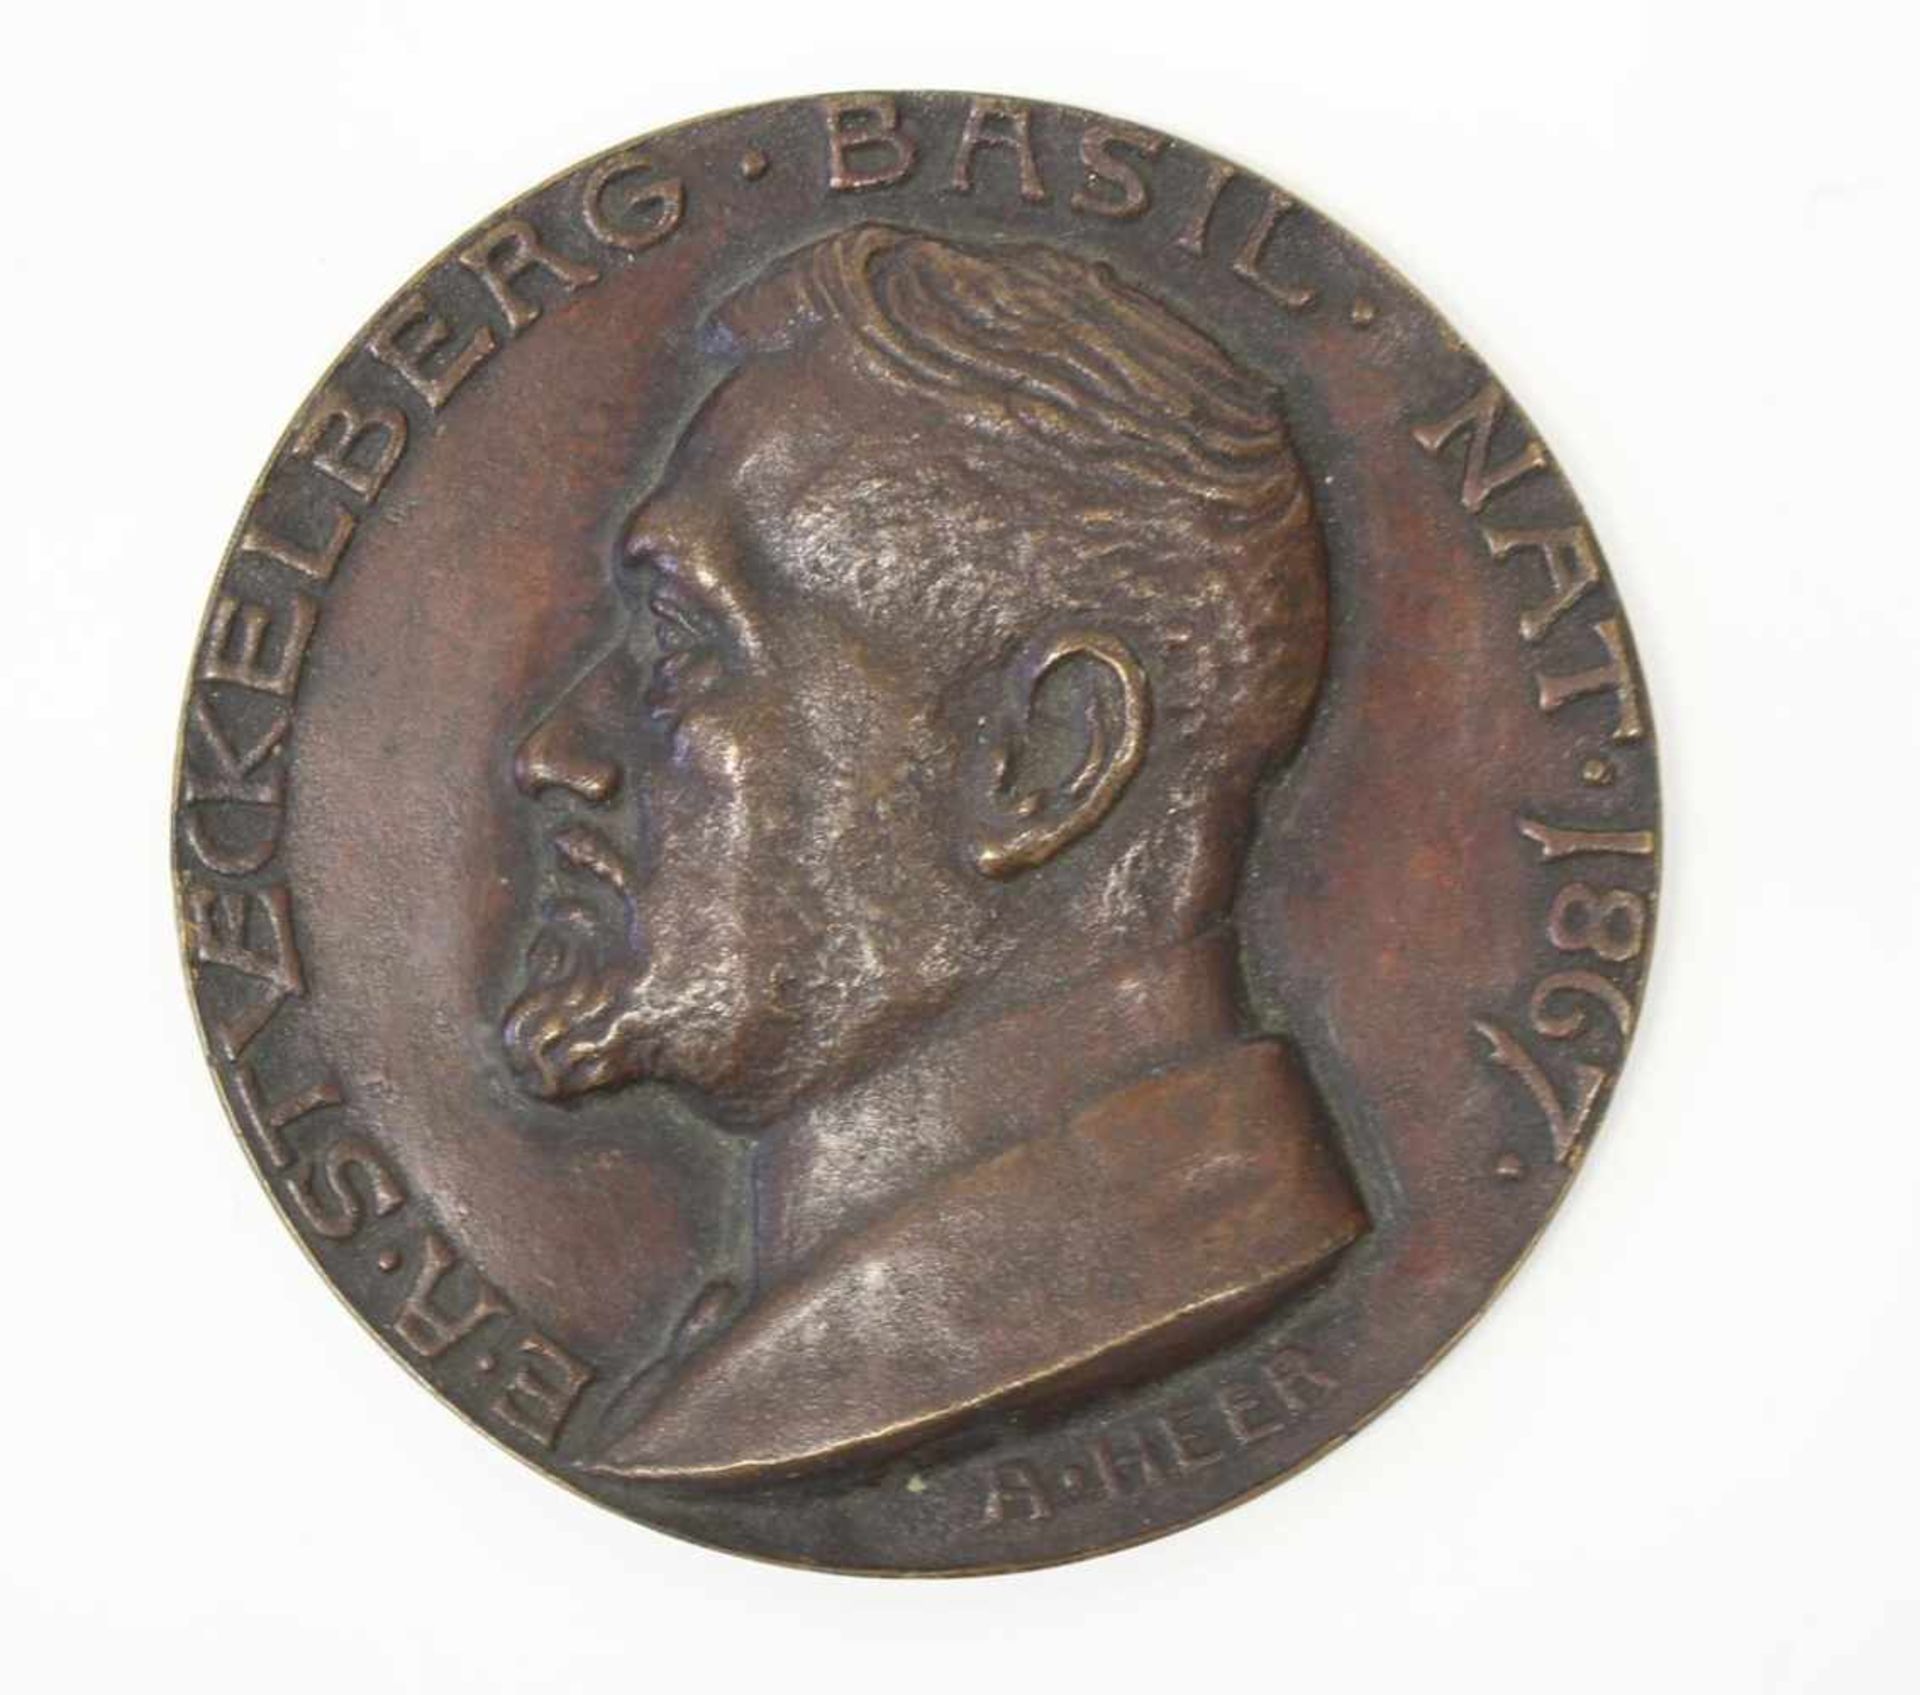 E.A.Stückelberg Portraitmedaillevon August Heer. Große Bronzemedaille D: ca 10 cm. Portrait des - Image 2 of 3